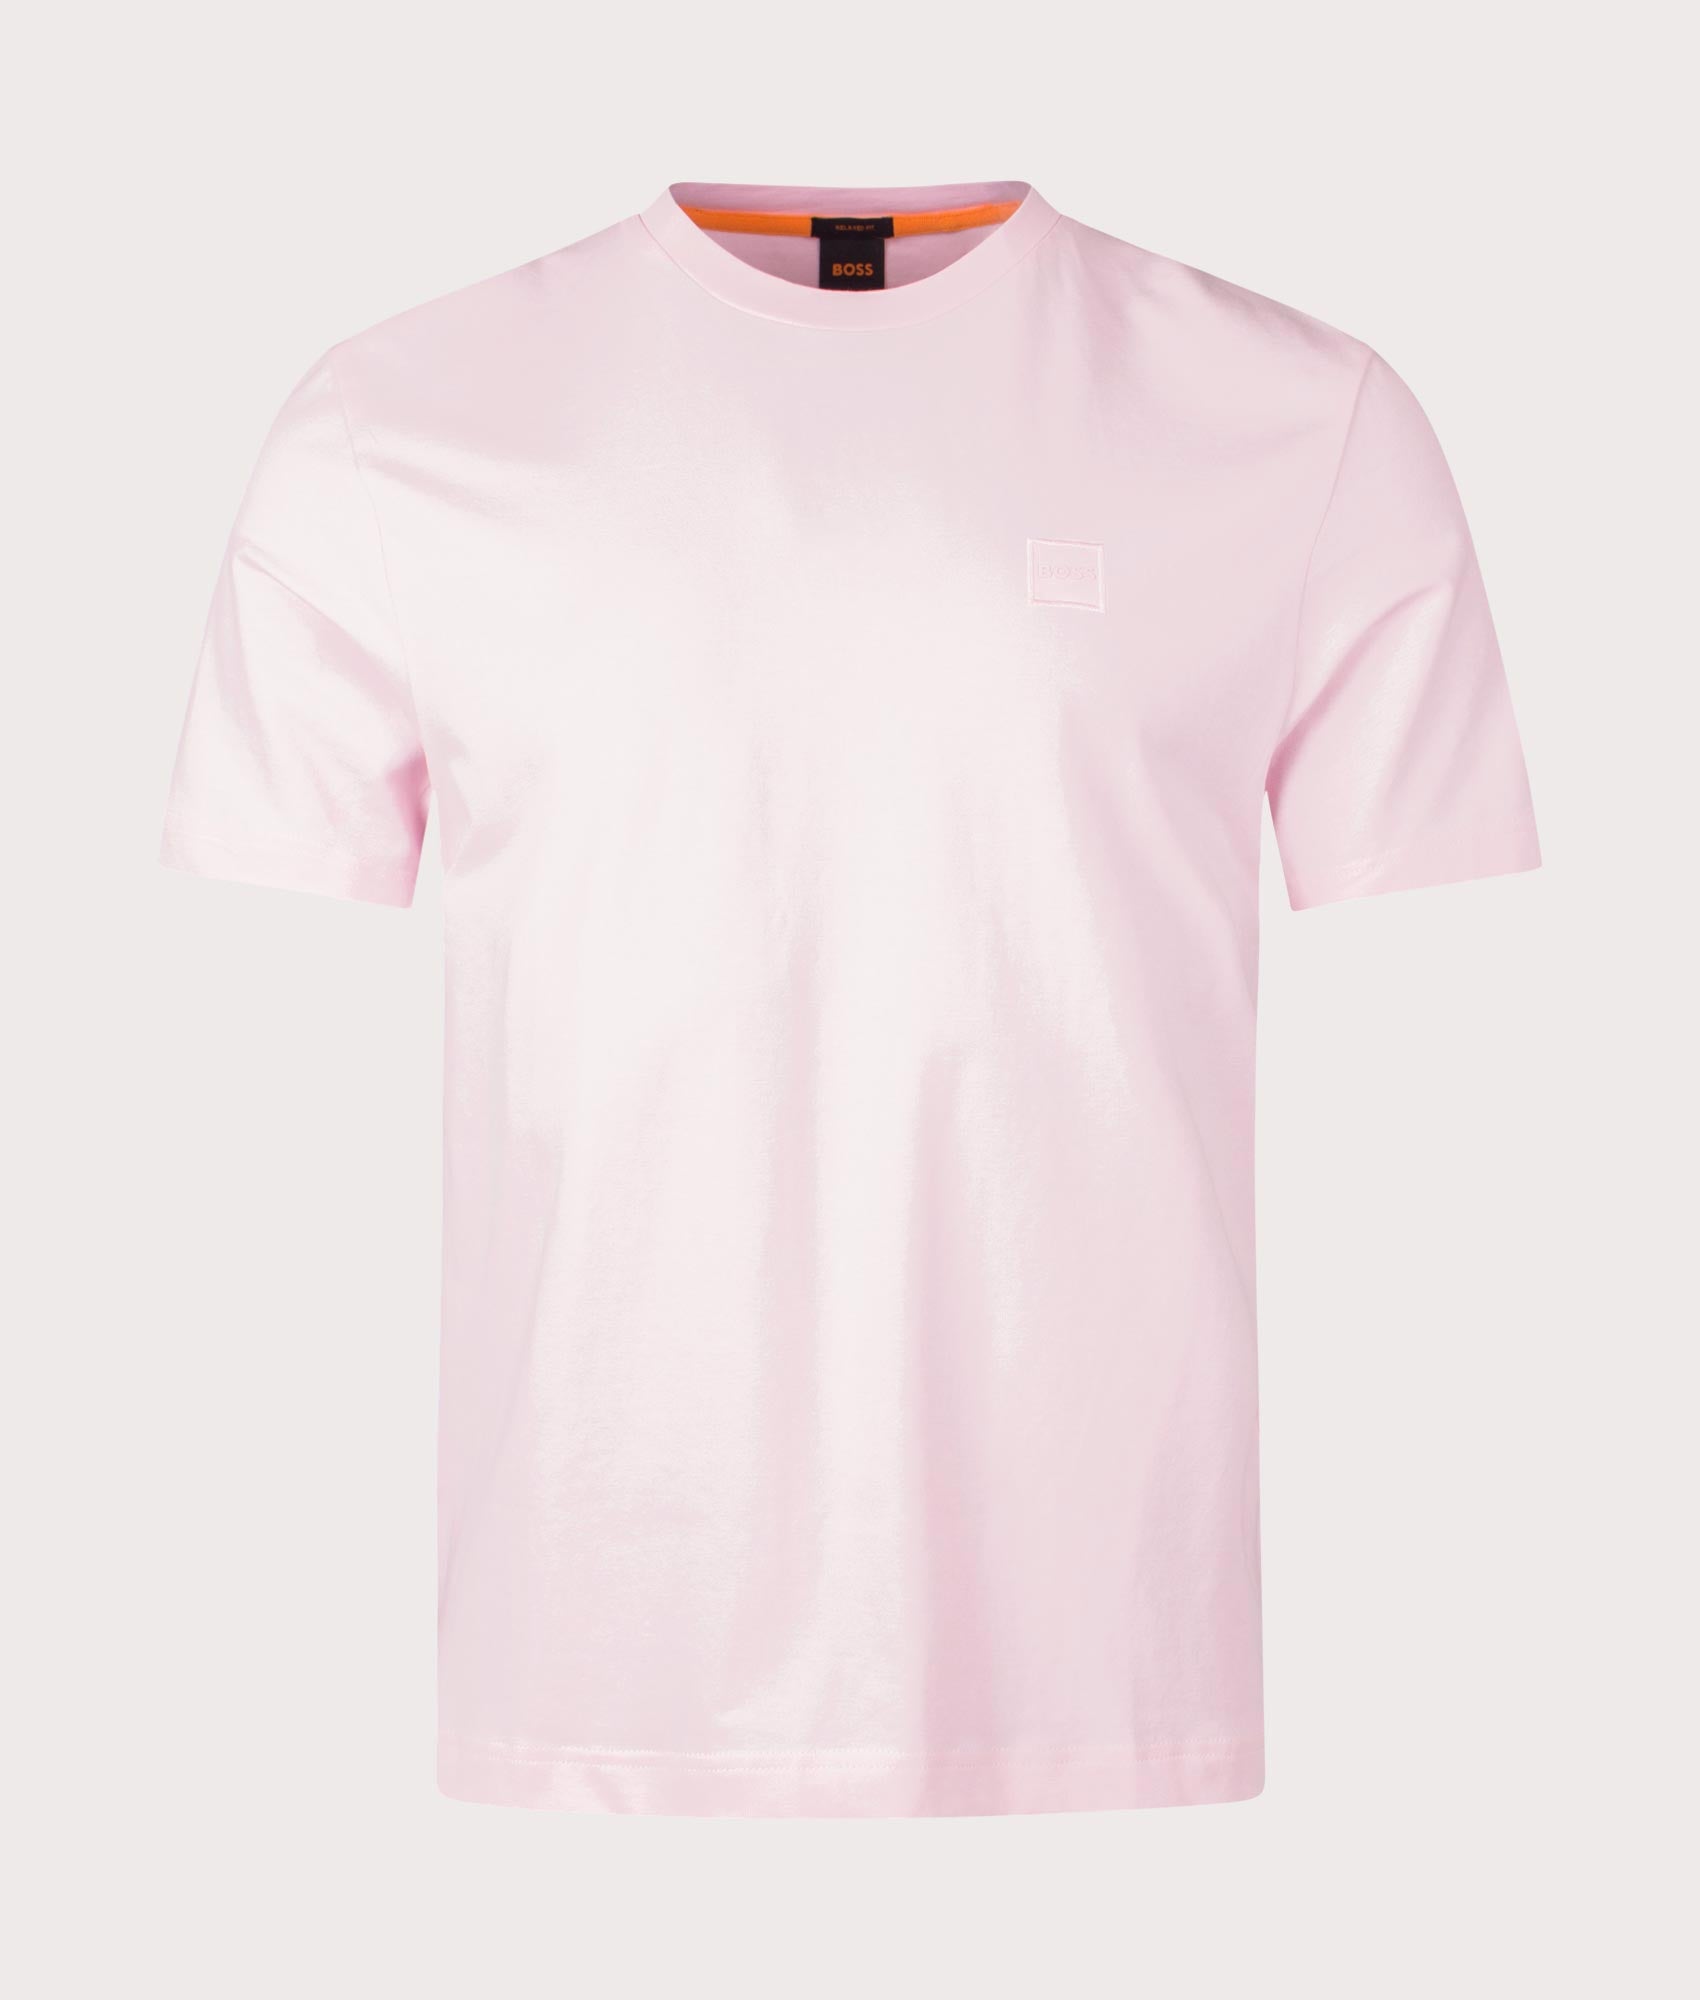 BOSS Mens Tales T-Shirt - Colour: 682 Light/Pastel Pink - Size: Large